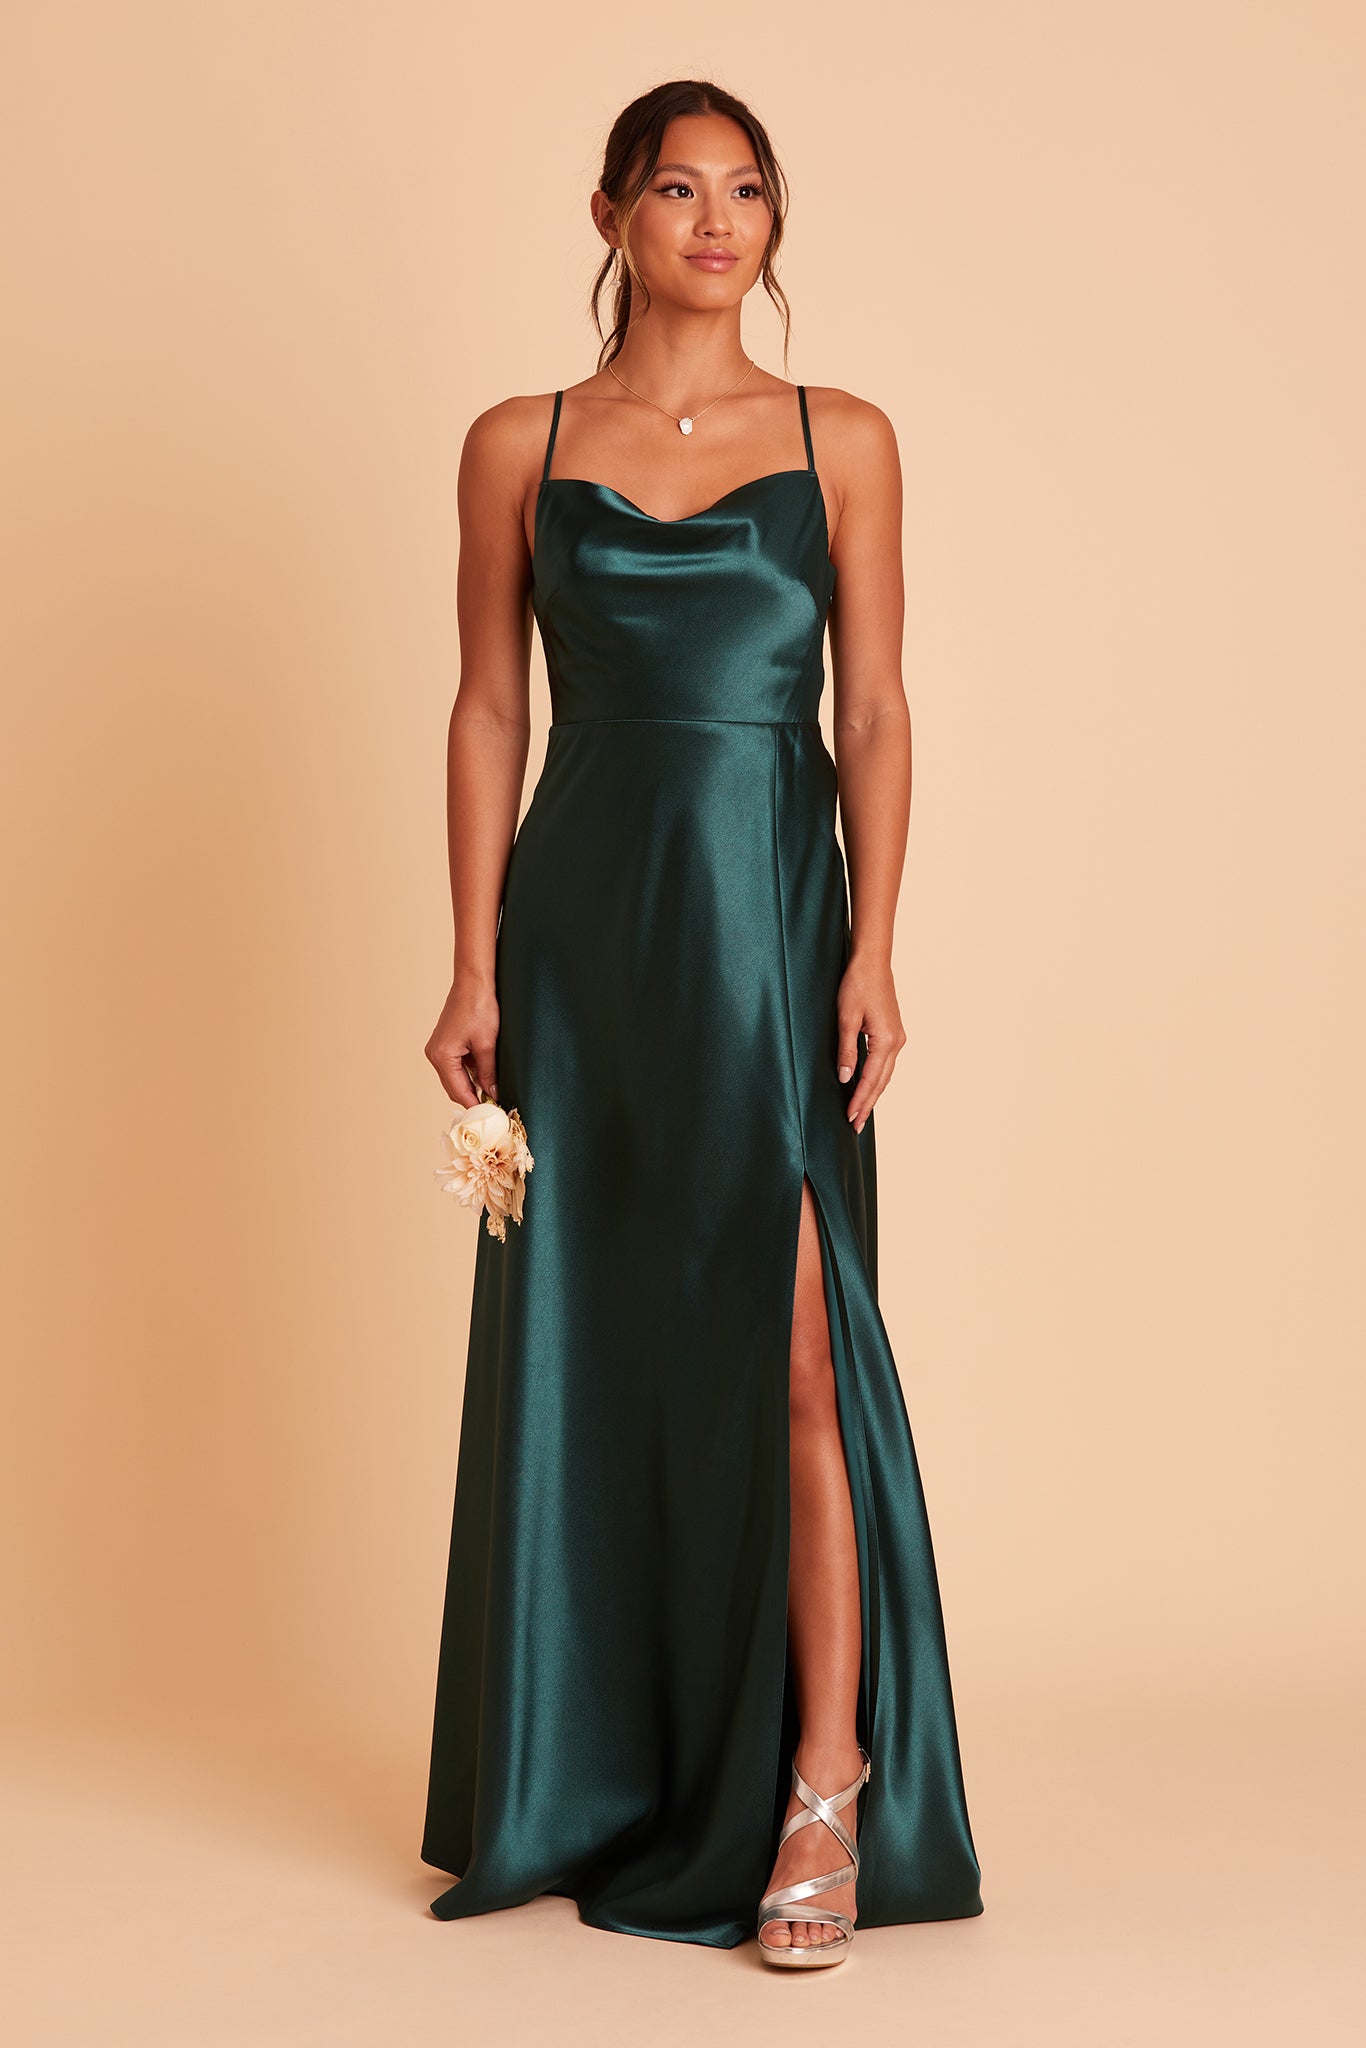 Emerald Lisa Long Satin Dress by Birdy Grey